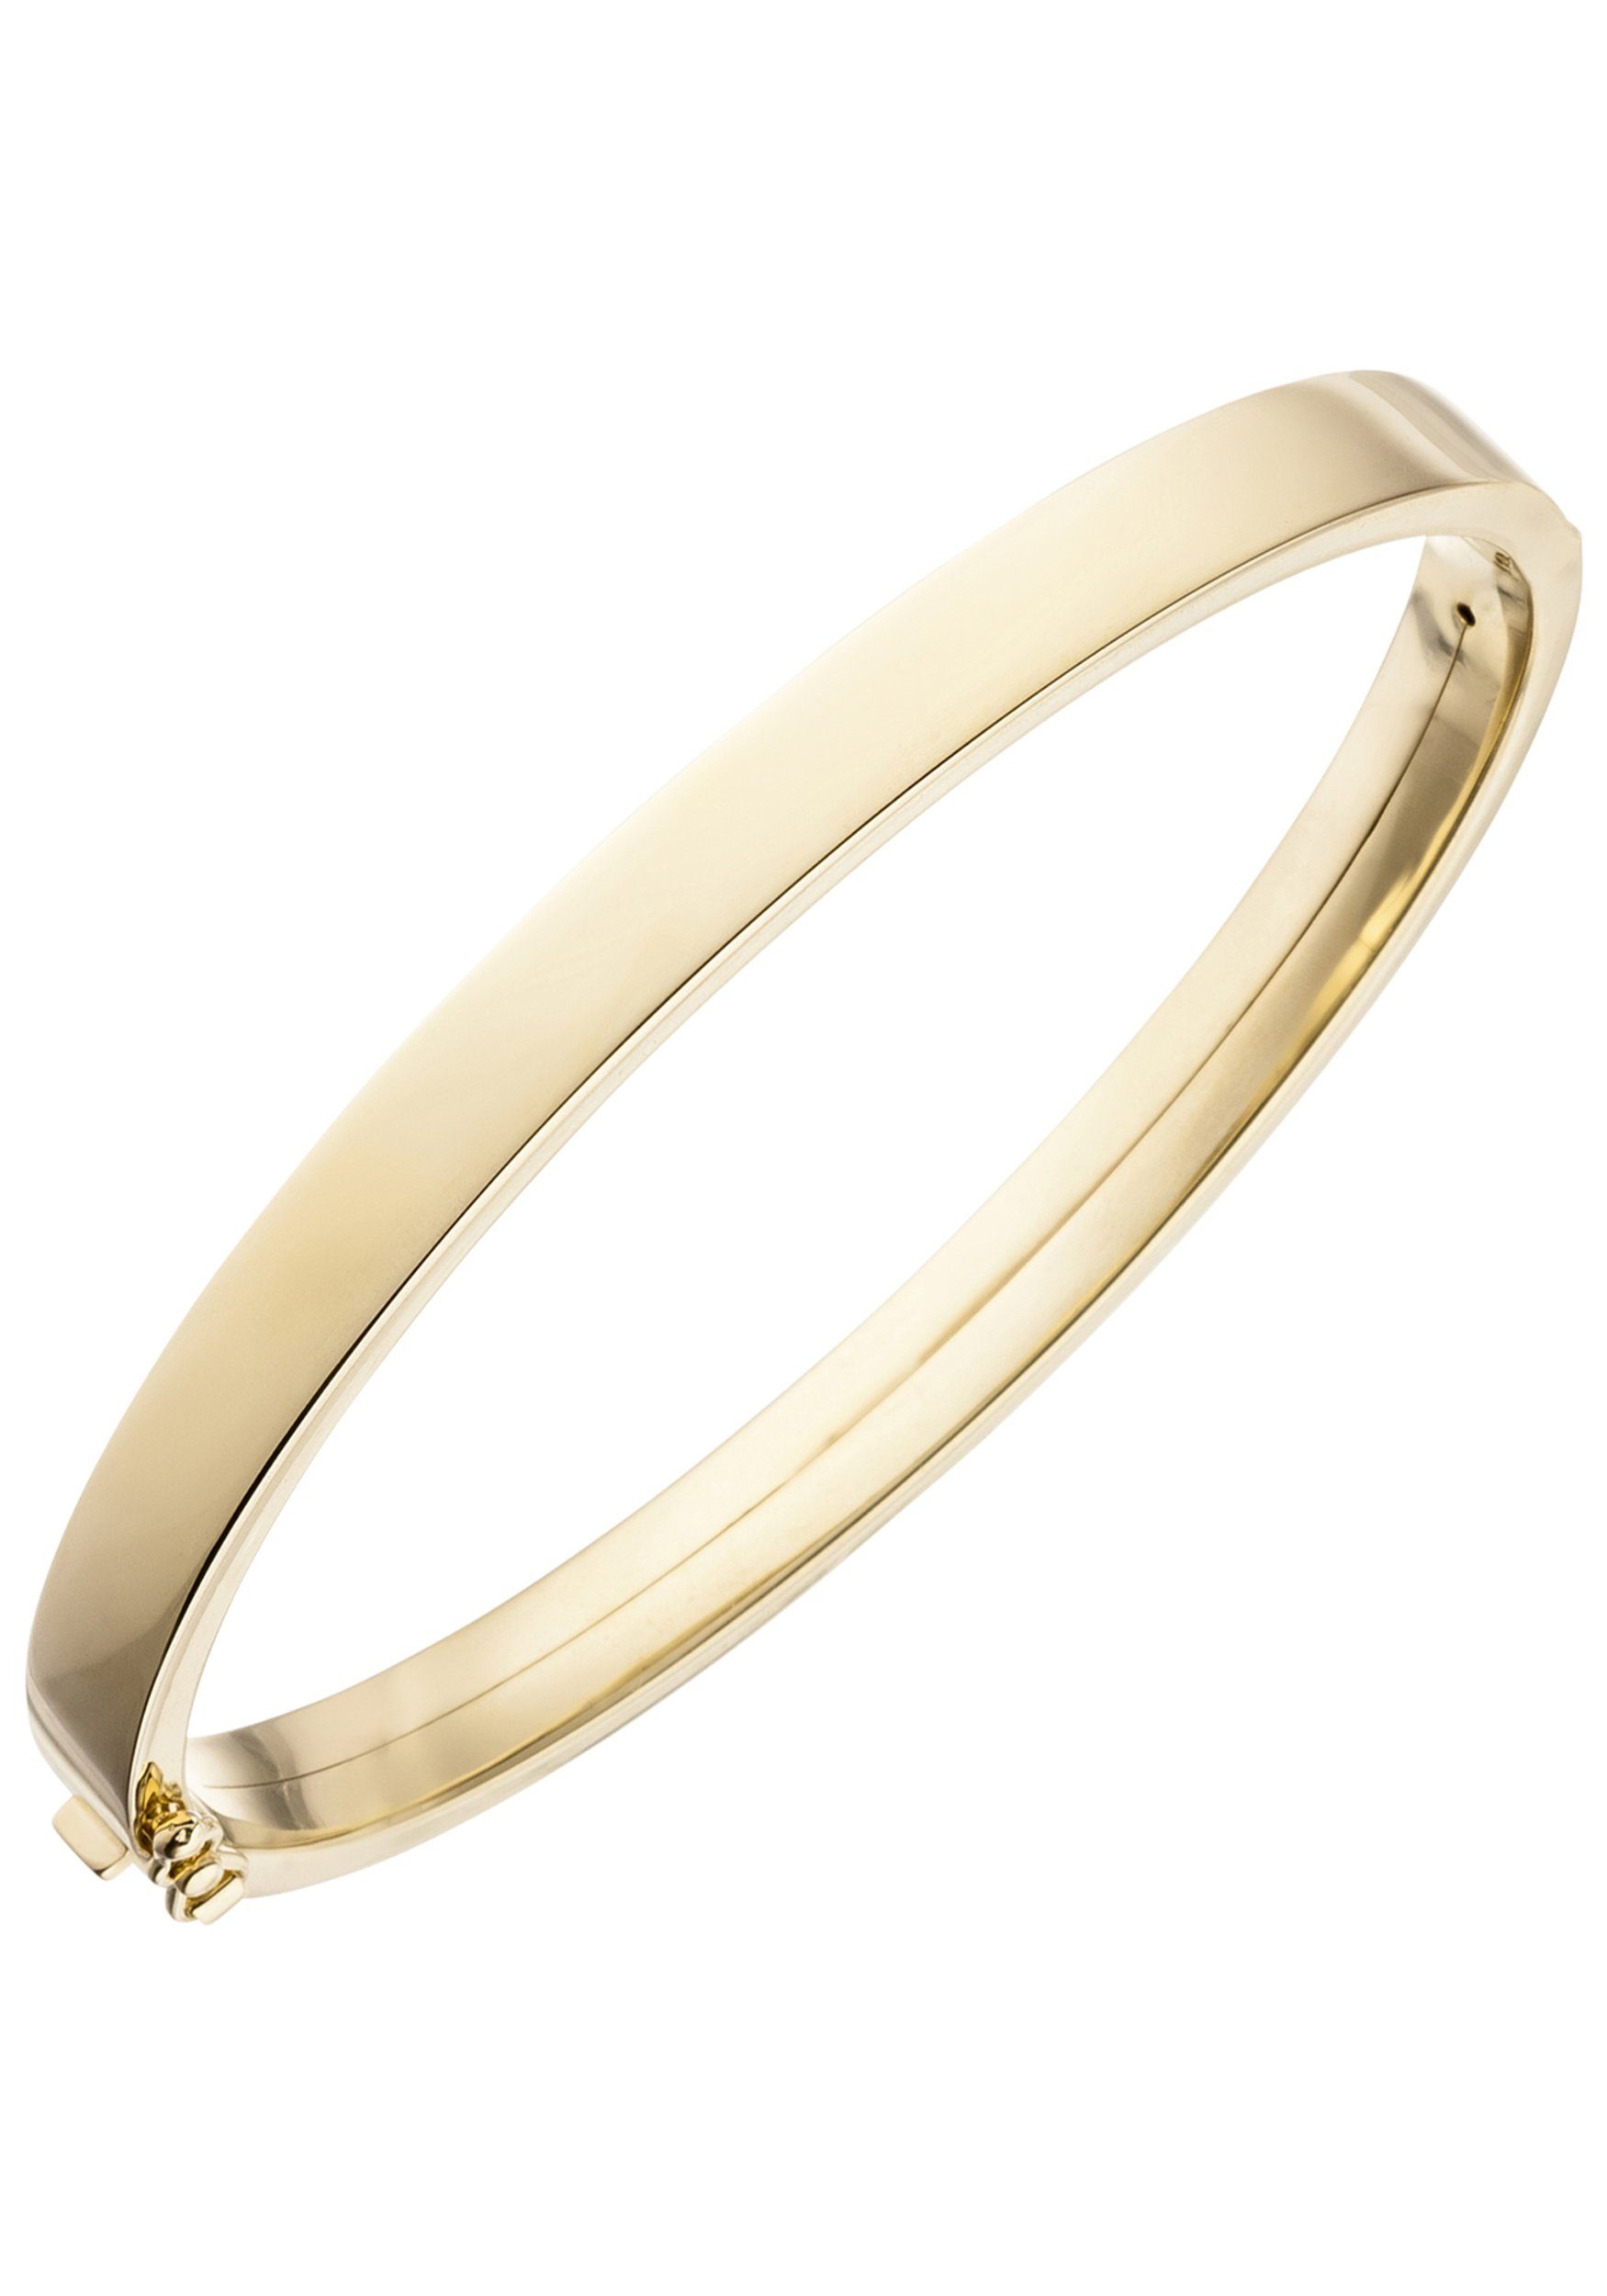 JOBO Armreif, oval 375 Gold, Juwelierqualität der Marke JOBO online kaufen  | OTTO